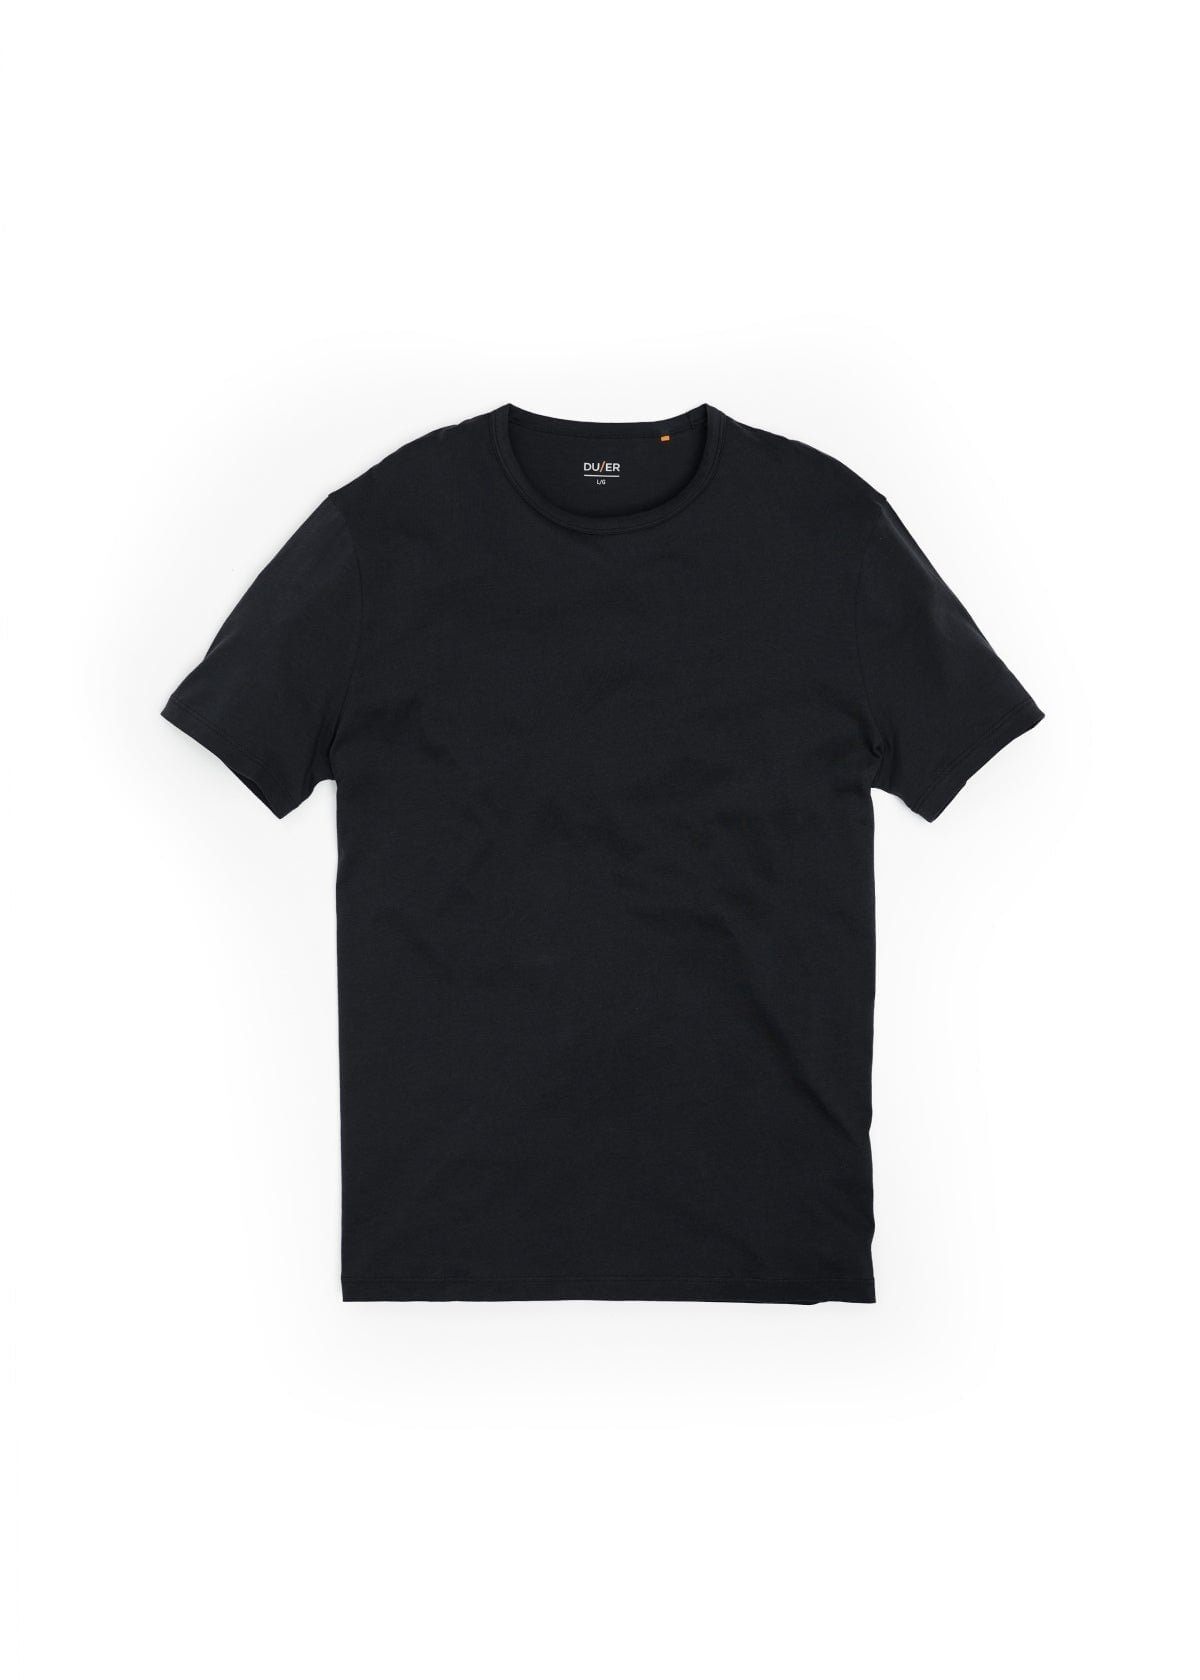 men's black t-shirt